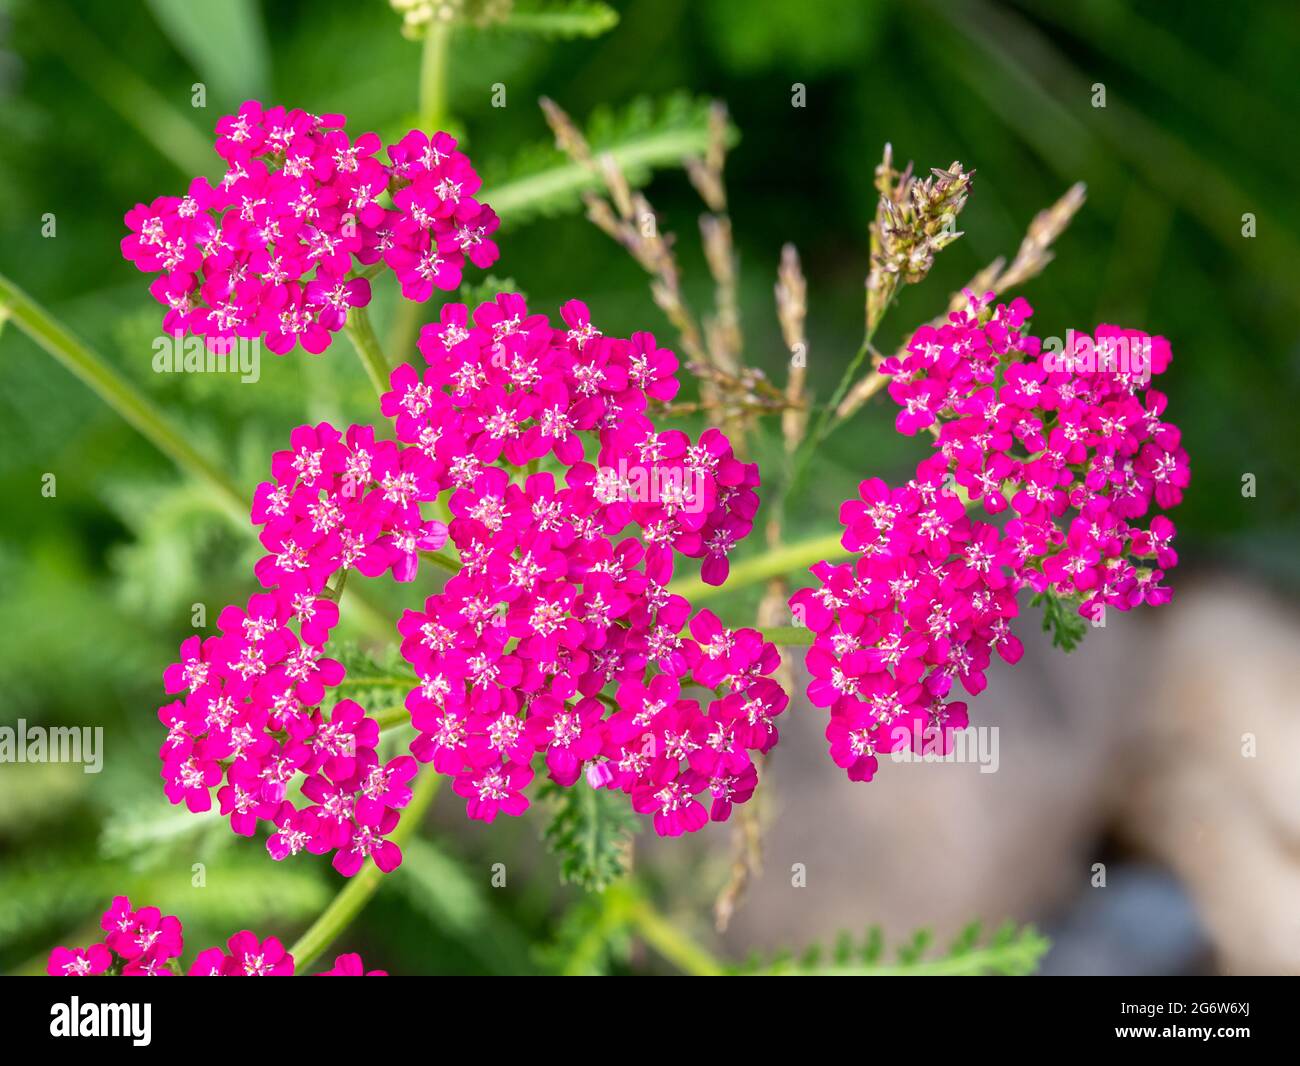 https://c8.alamy.com/comp/2G6W6XJ/common-yarrow-achillea-millefolium-cerise-queen-native-plant-with-cerise-pink-flowers-in-garden-netherlands-2G6W6XJ.jpg